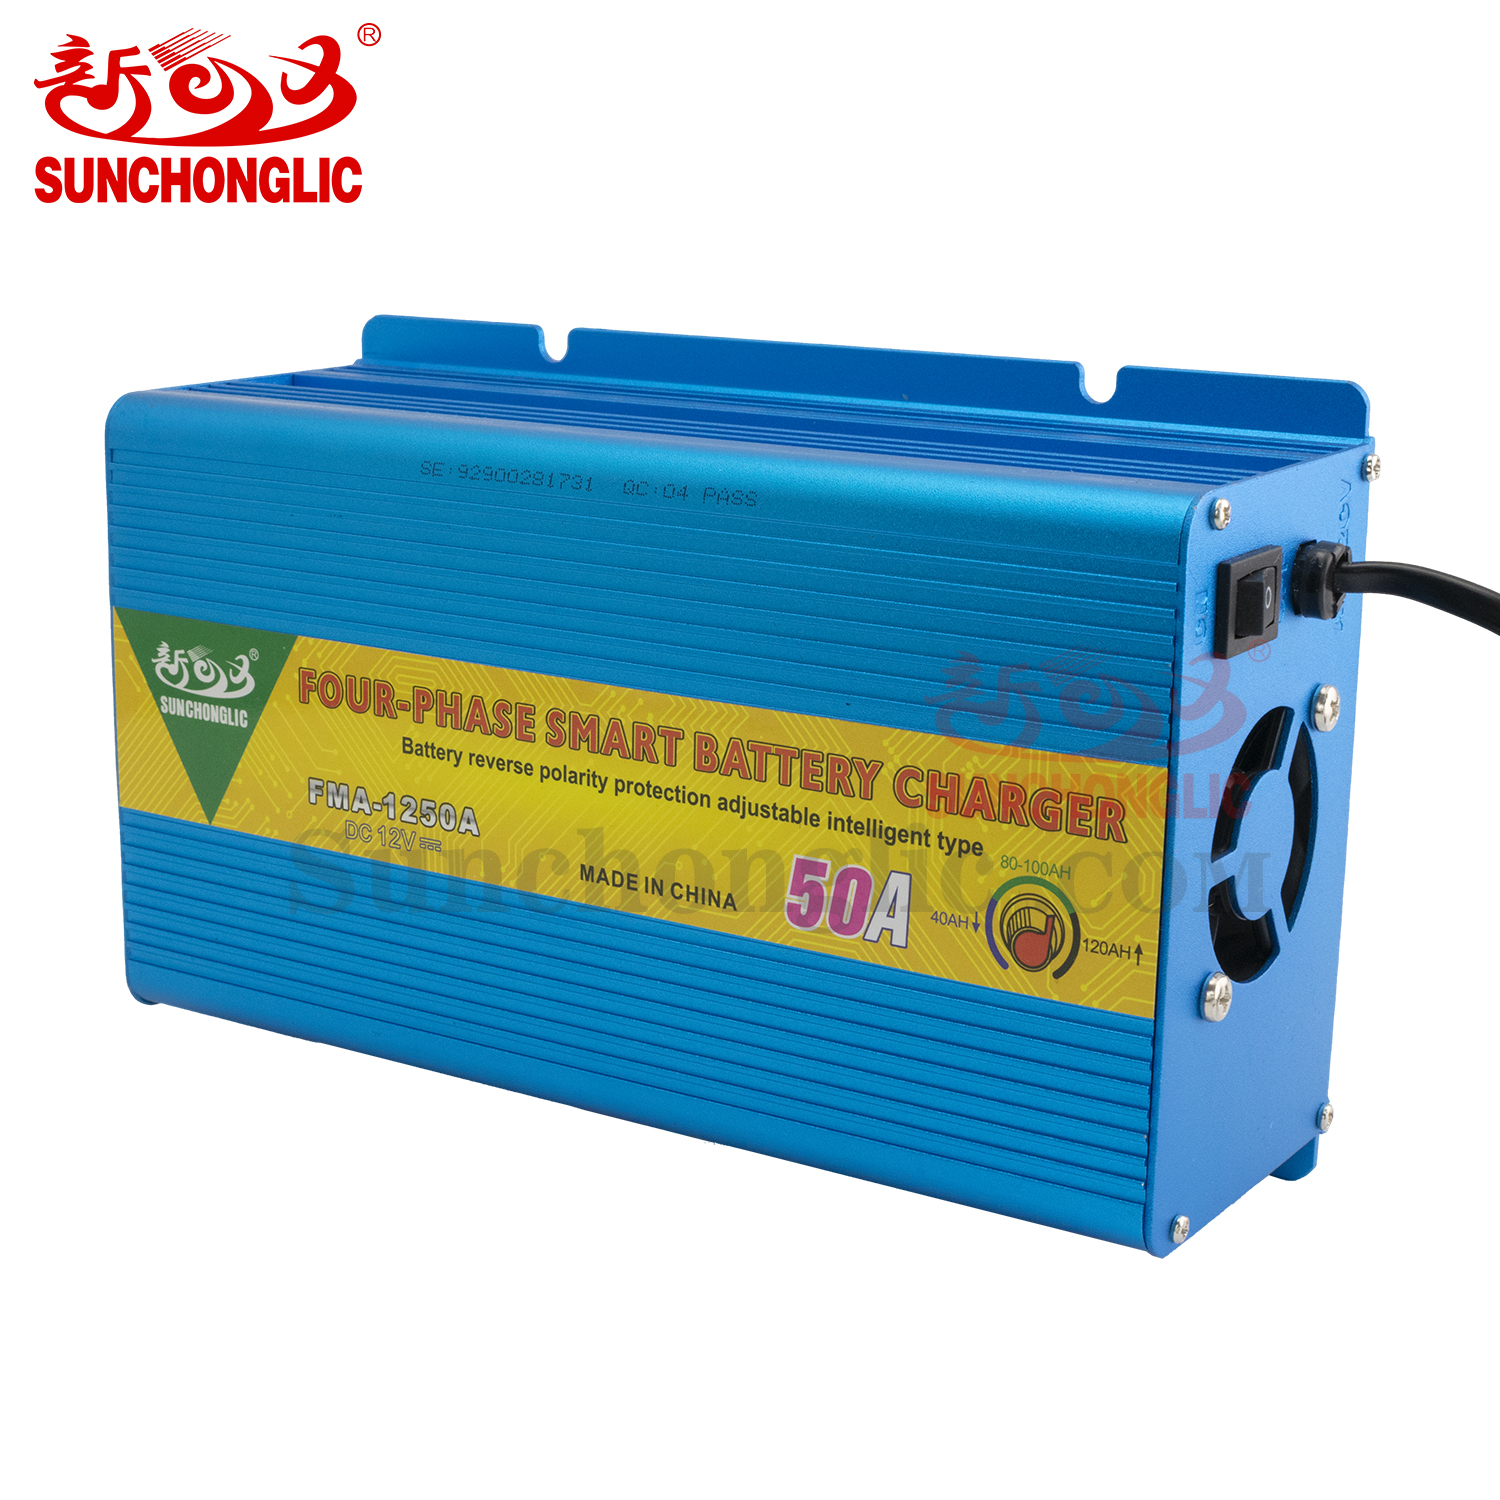 12 volt 50A AGM GEL lead acid car battery charger